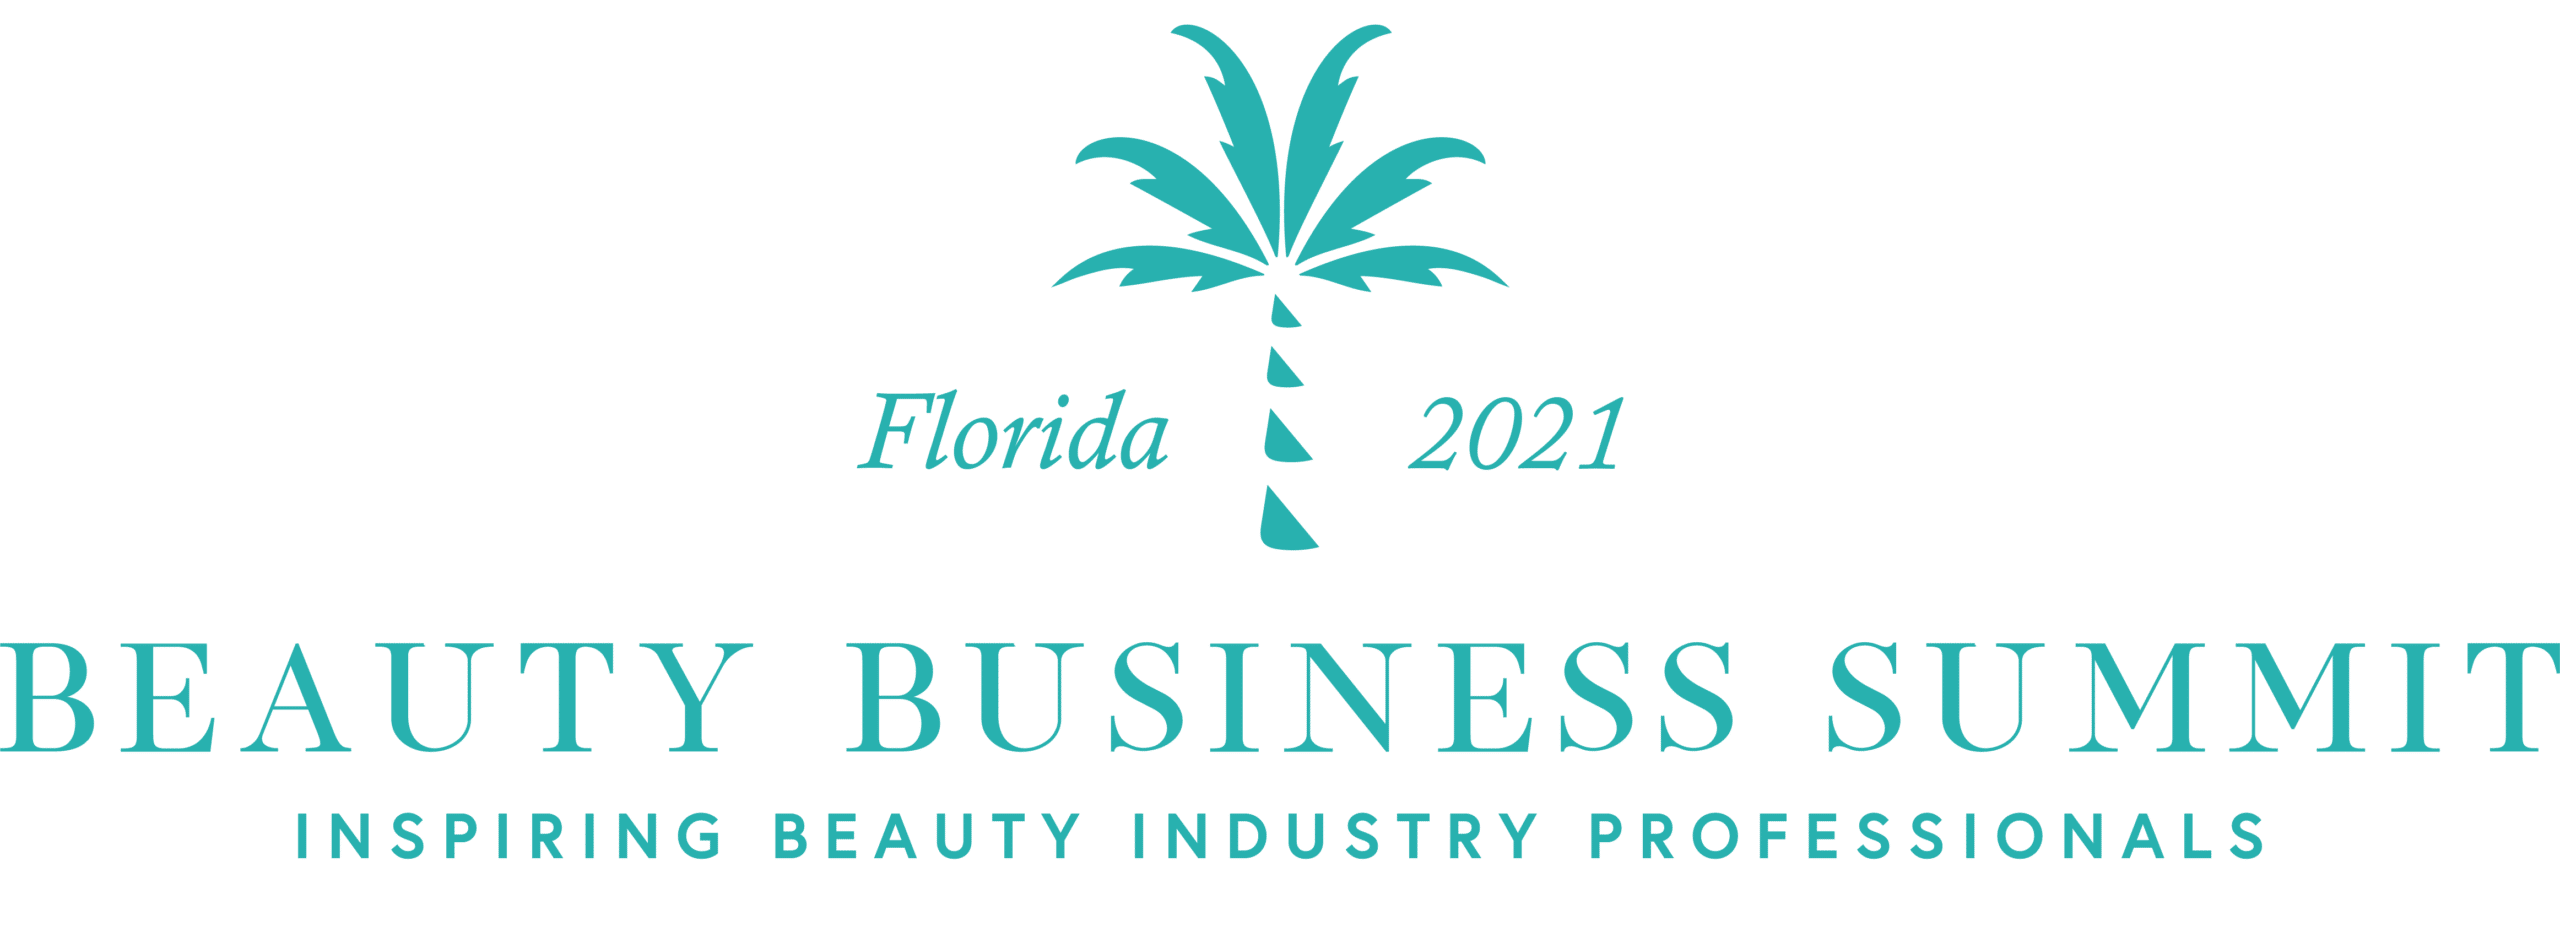 Beauty Business Summit 2021